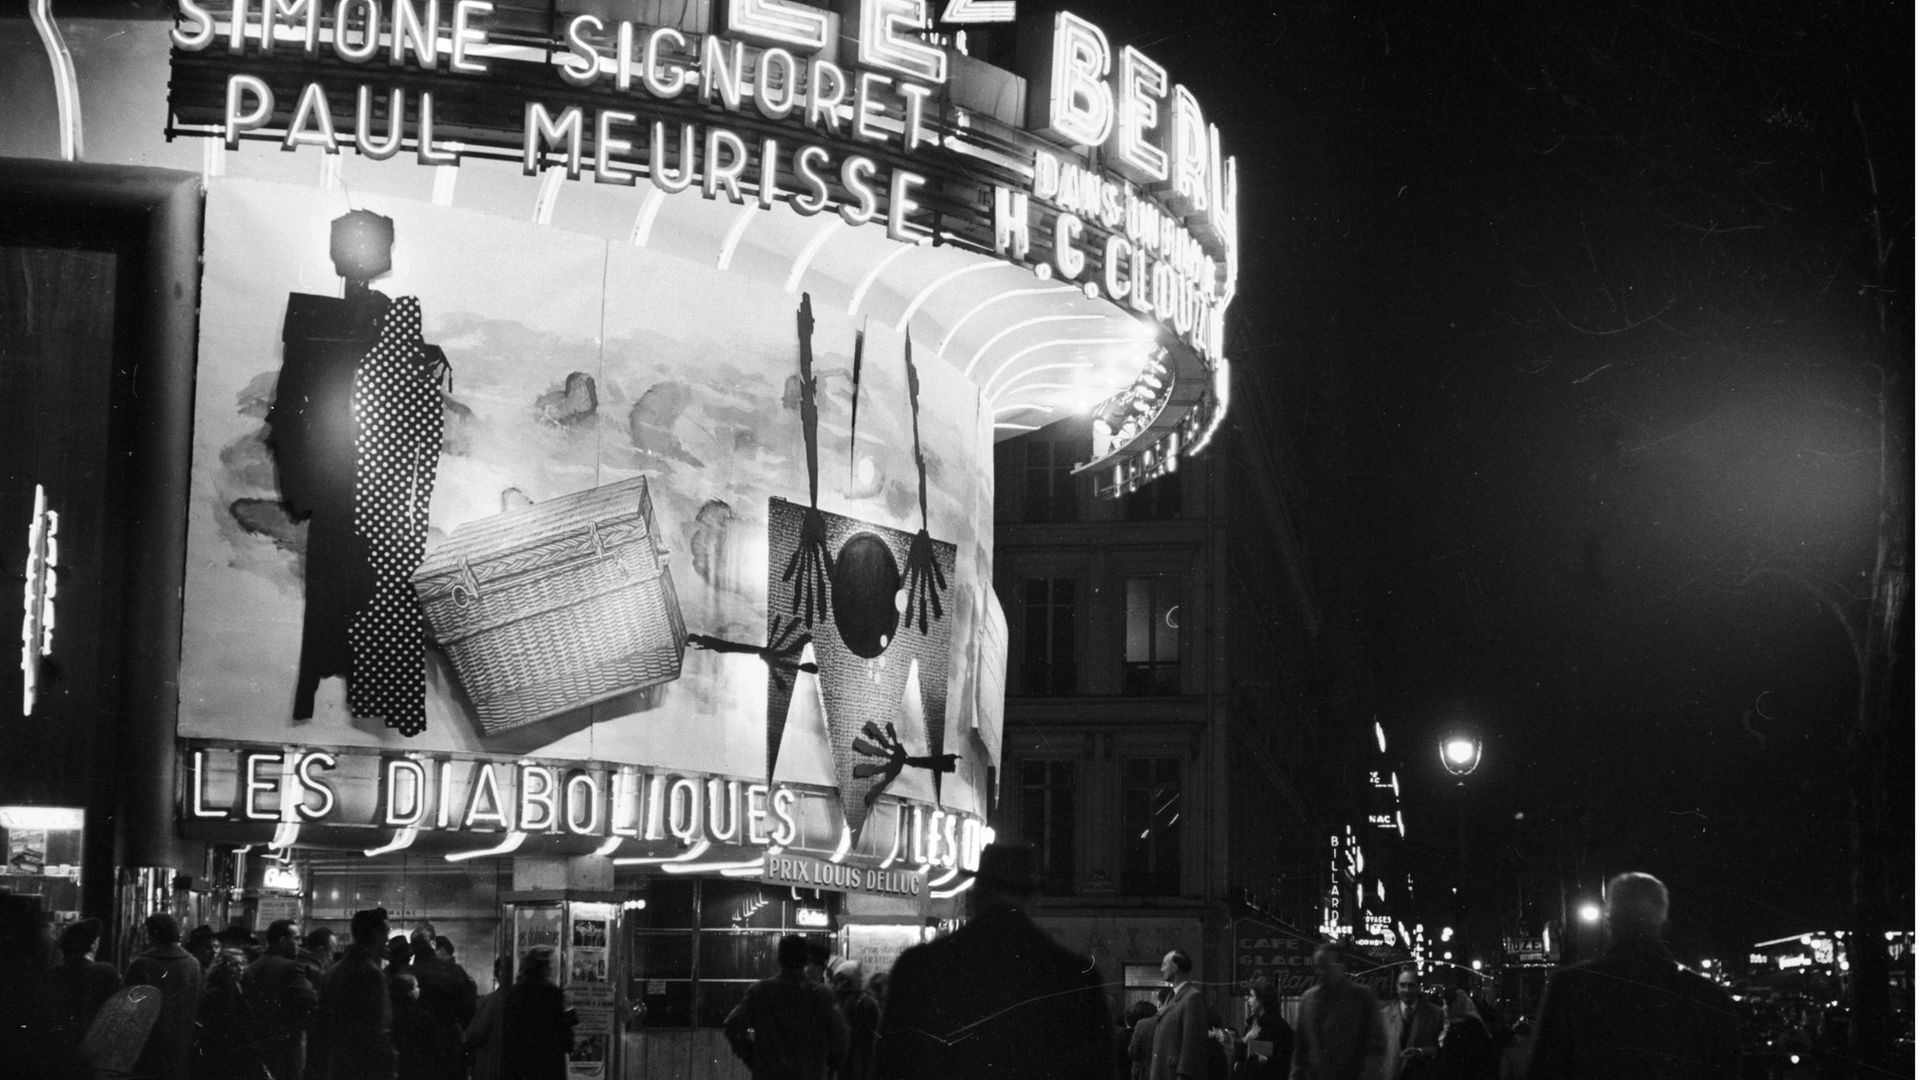 The cinema Le Berlitz with Moviedrome favourite Les Diaboliques playing, Paris, 1955 - Credit: Photo by Gaston Paris/Roger Viollet via Getty Images